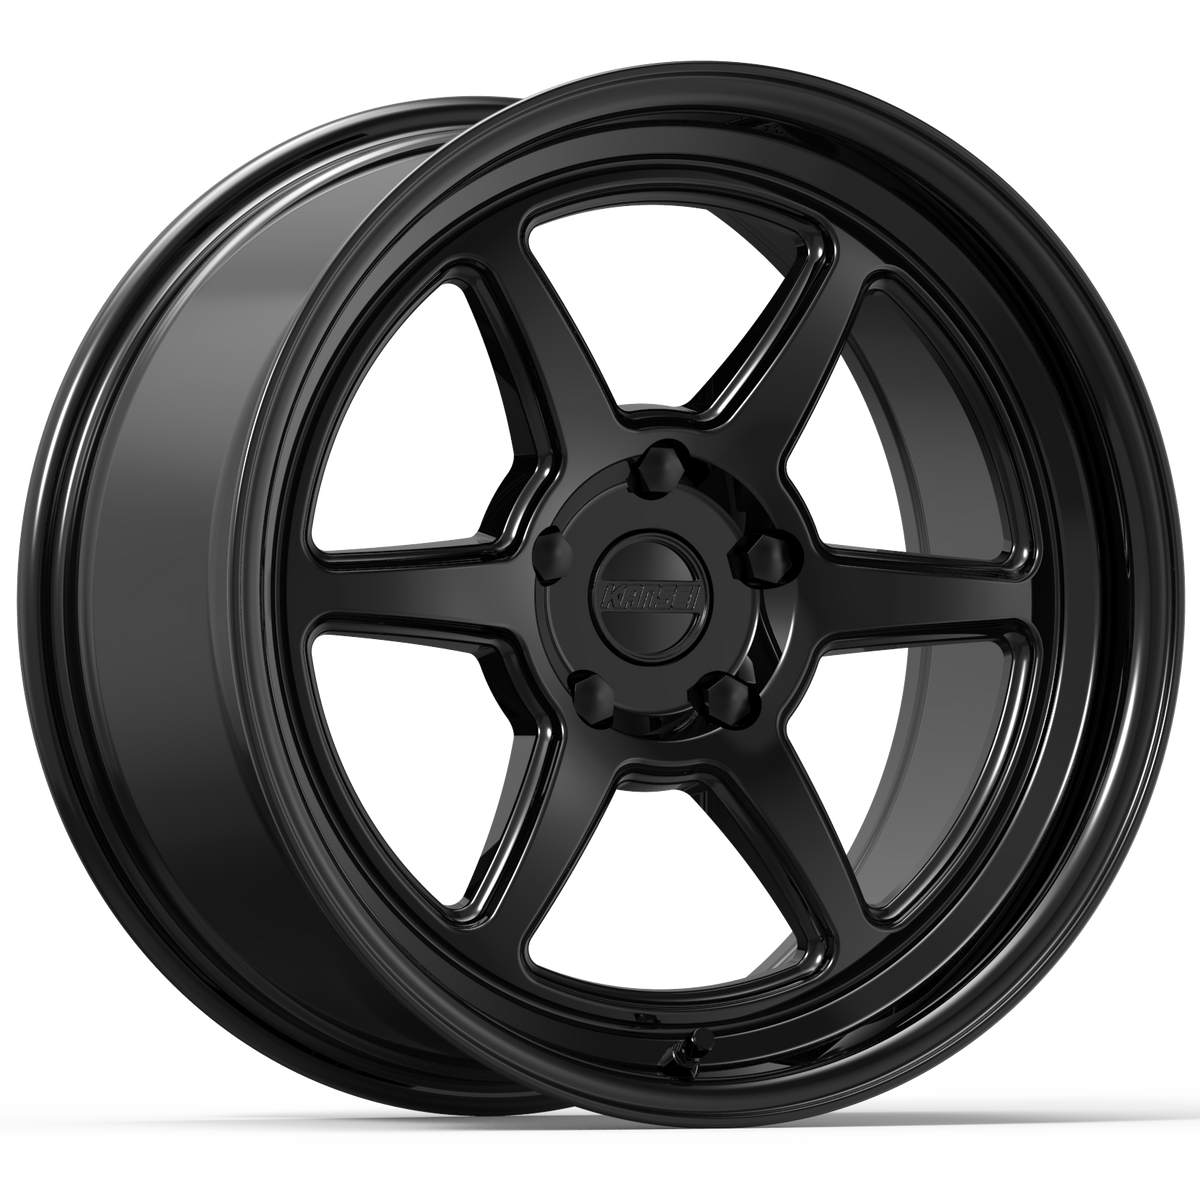 K14B ROKU Wheel, Size: 18" x 9.50", Bolt Pattern: 5 x 112 mm, Backspace: 6.75" [Finish: Gloss Black]